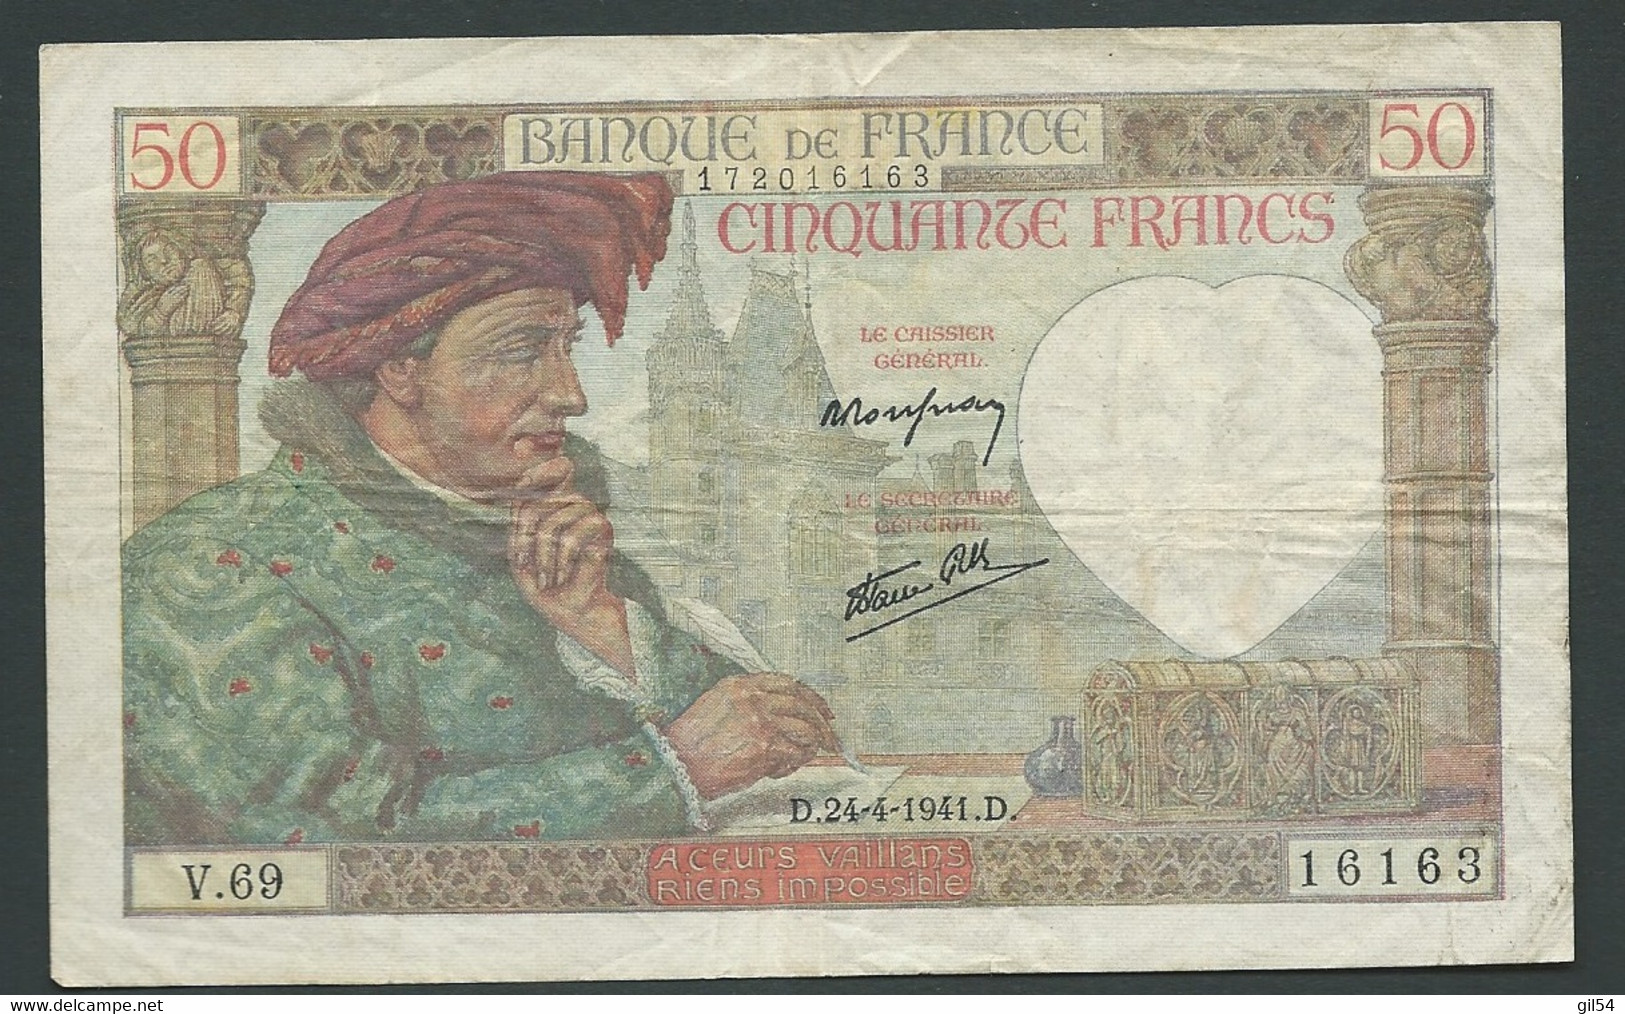 FRANCE BILLET  50 Francs, Jacques Coeur, 124/4/941   --  V.69   16163  DANS L'état  LAURA5706 - 50 F 1940-1942 ''Jacques Coeur''